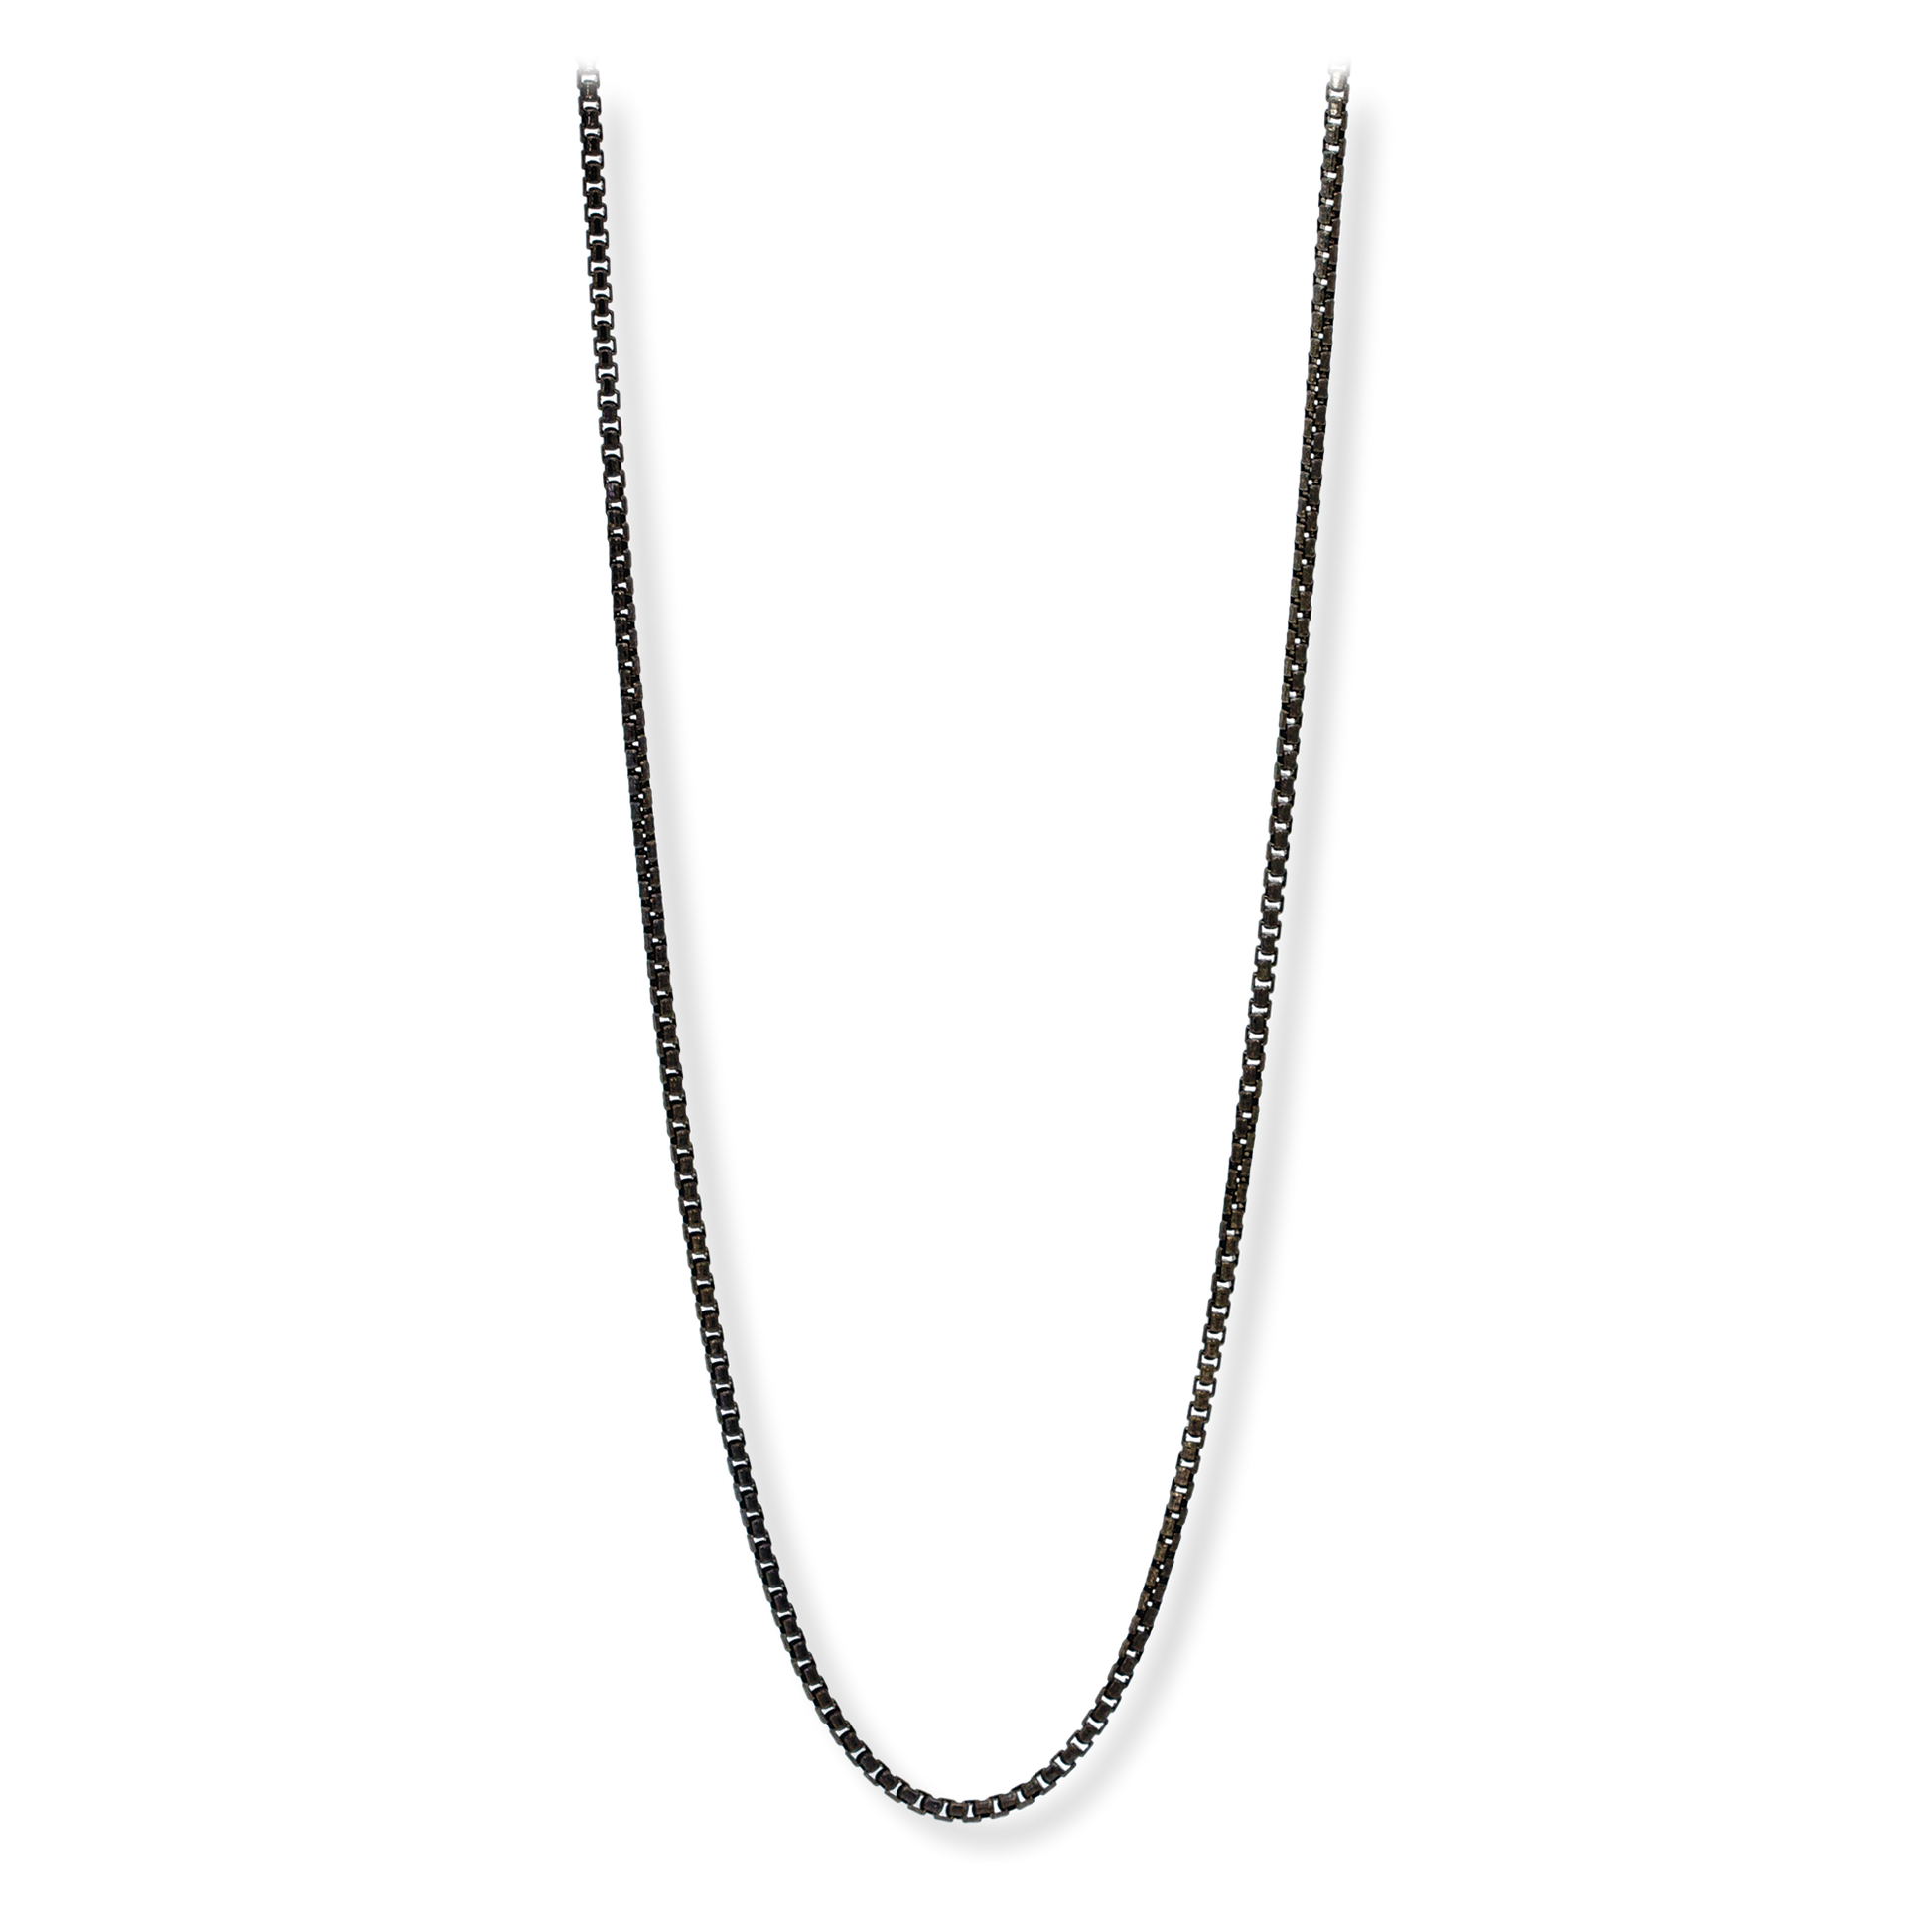 Franco Stellari Round Box Chain Necklace, 2mm Oxidized Finish